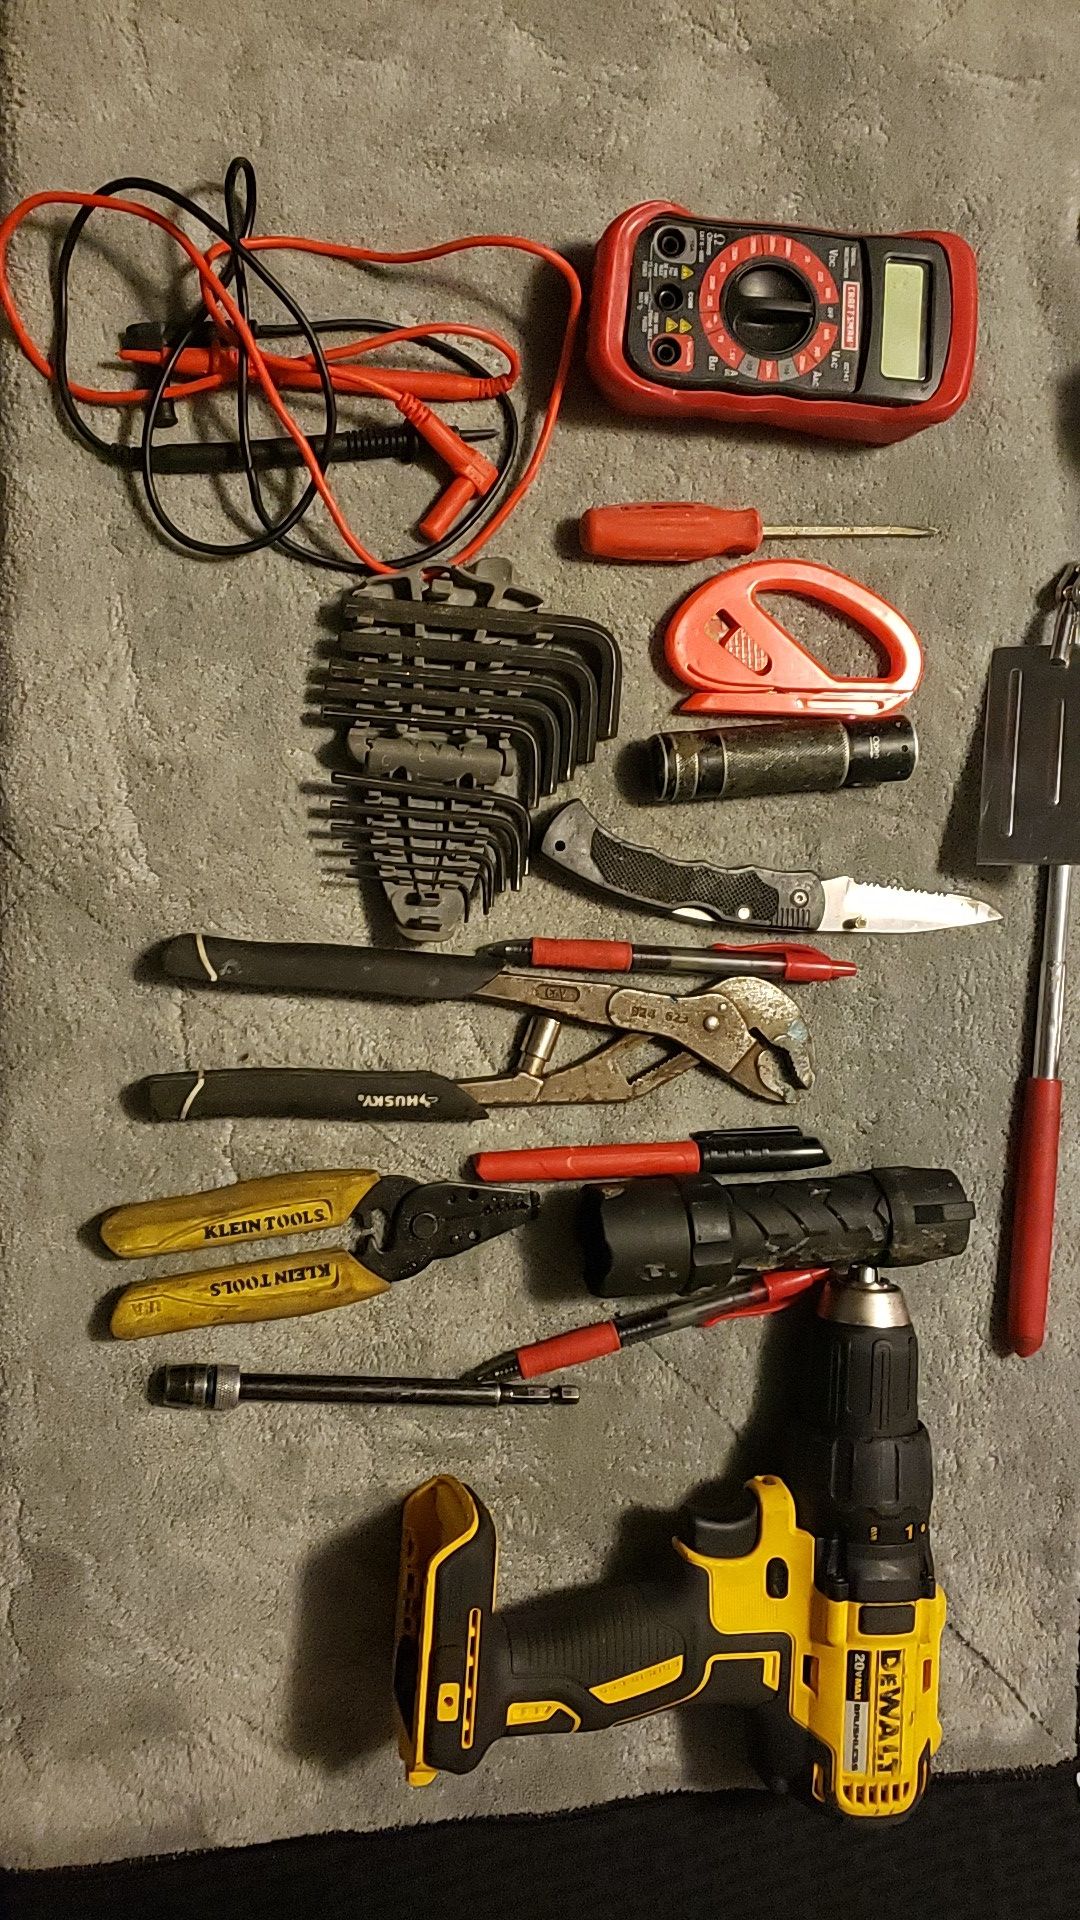 Dewalt drill and hand tools